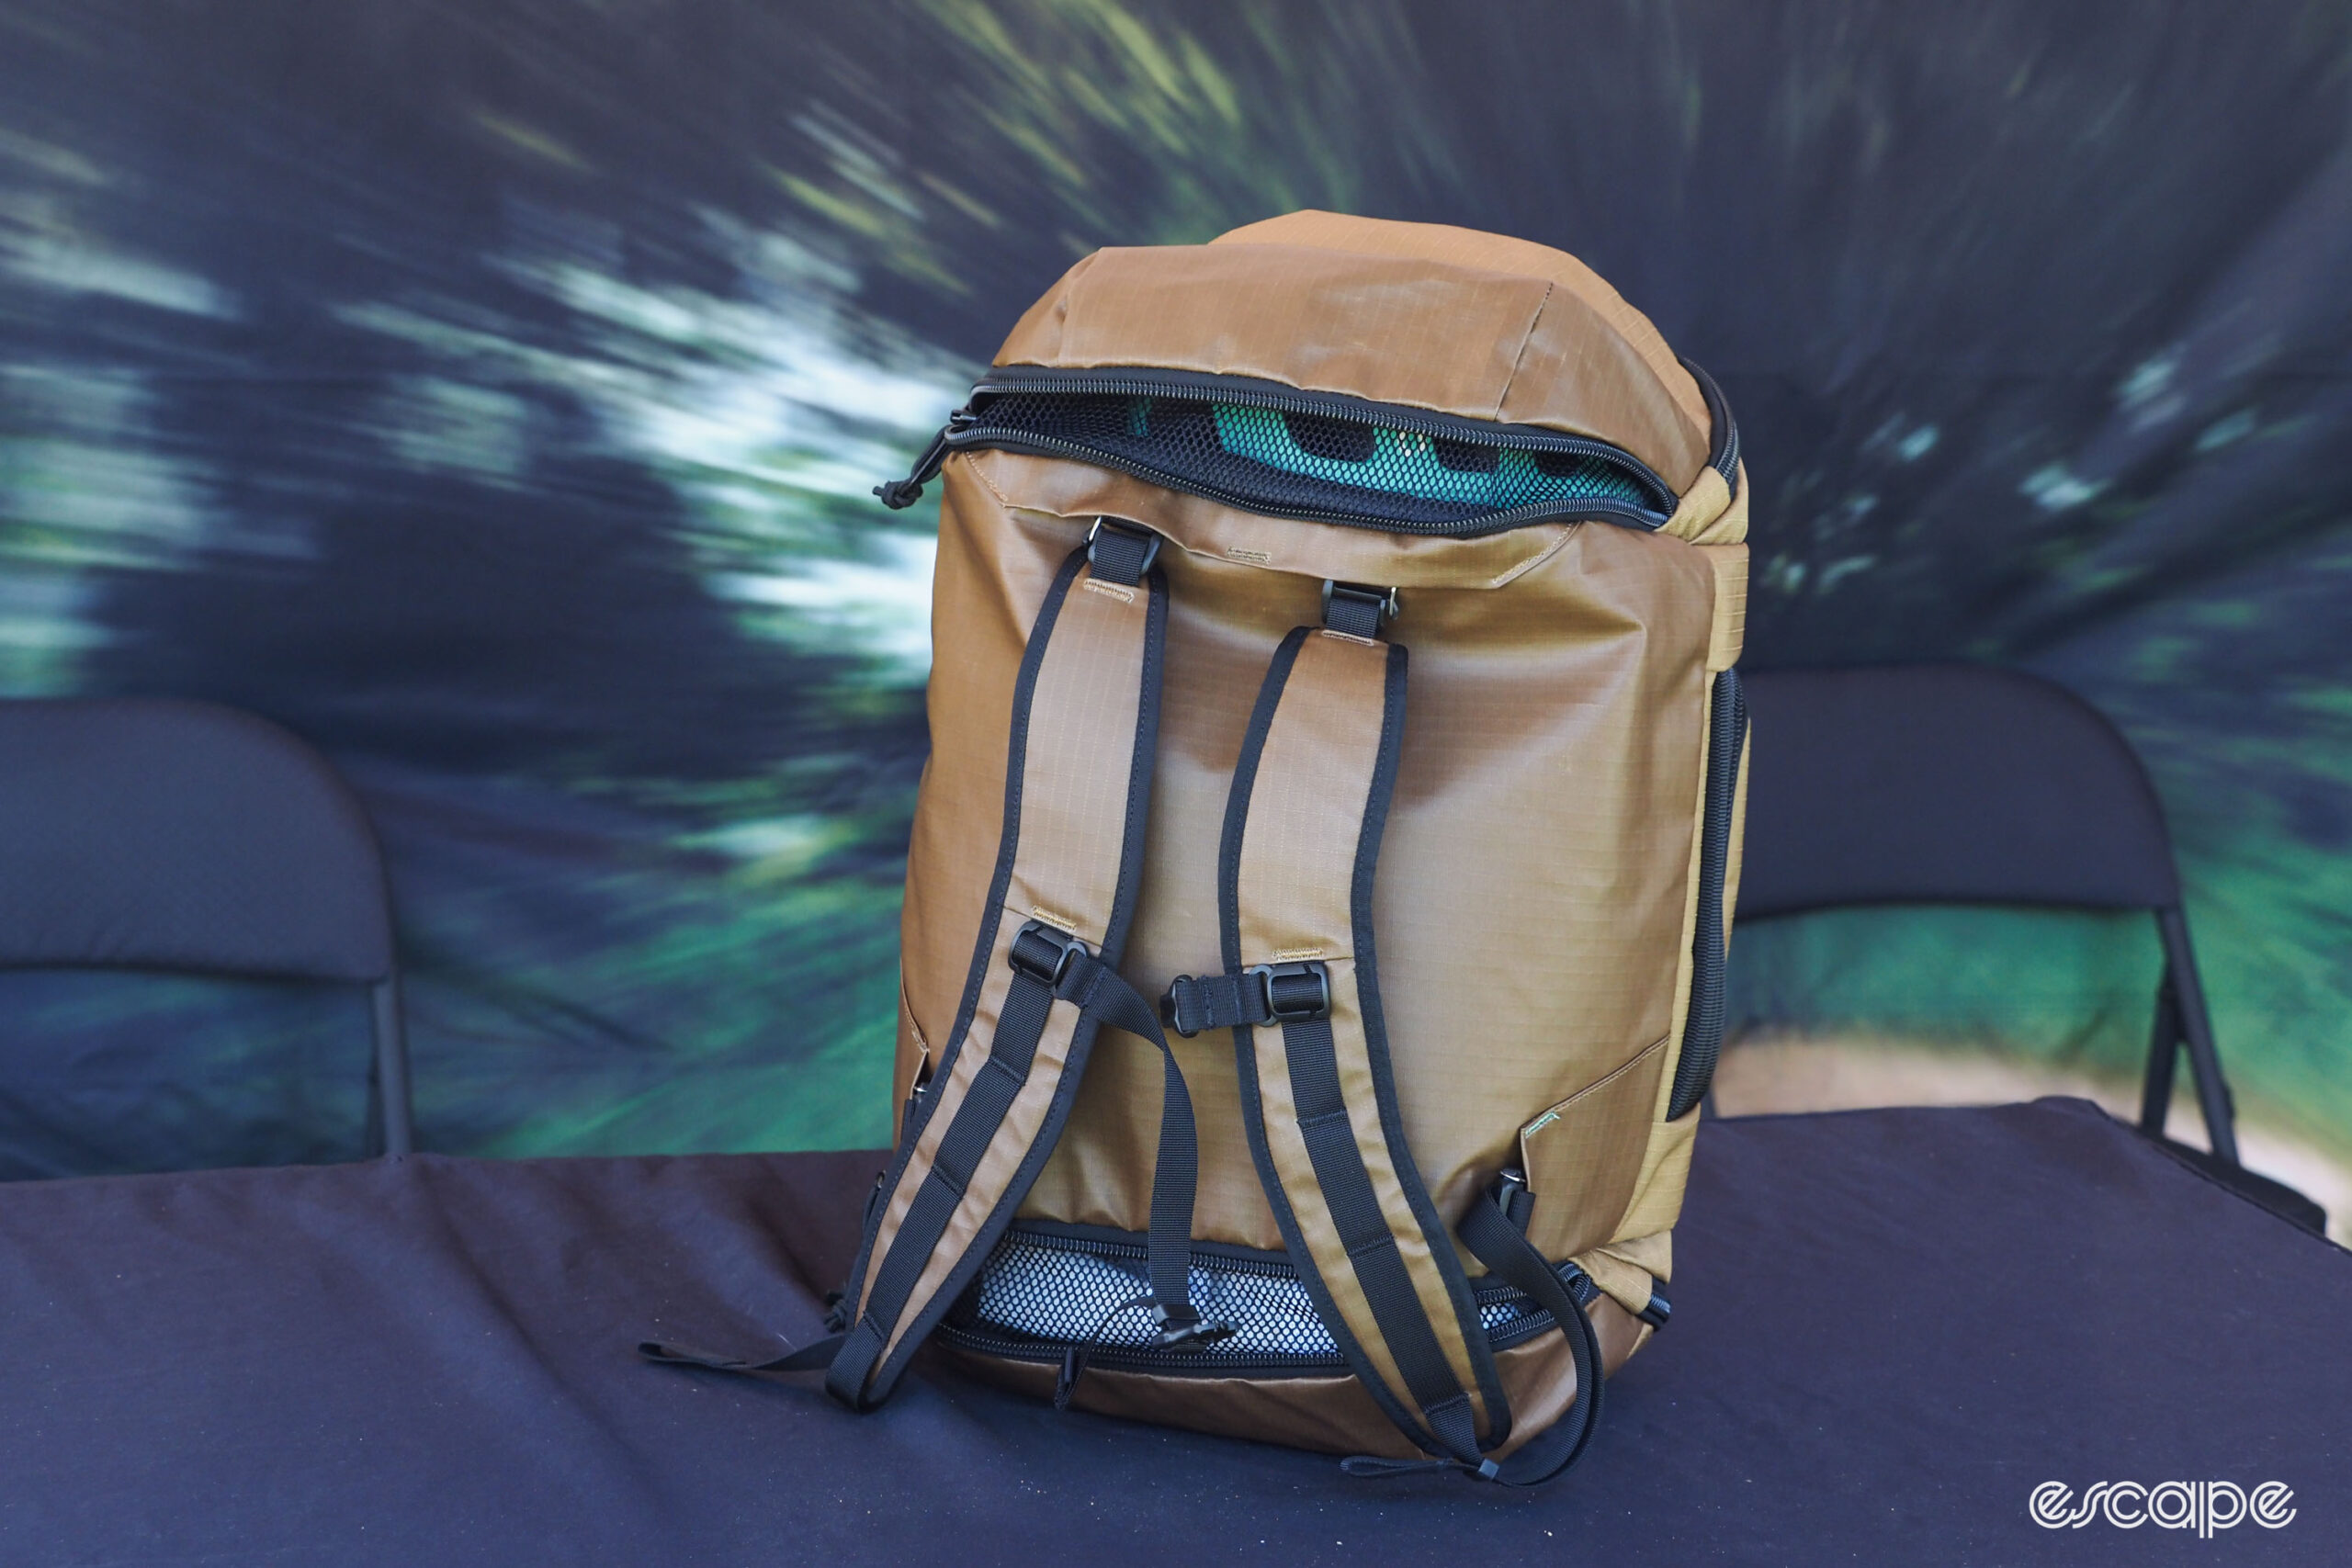 Orucase Janus duffel backpack straps